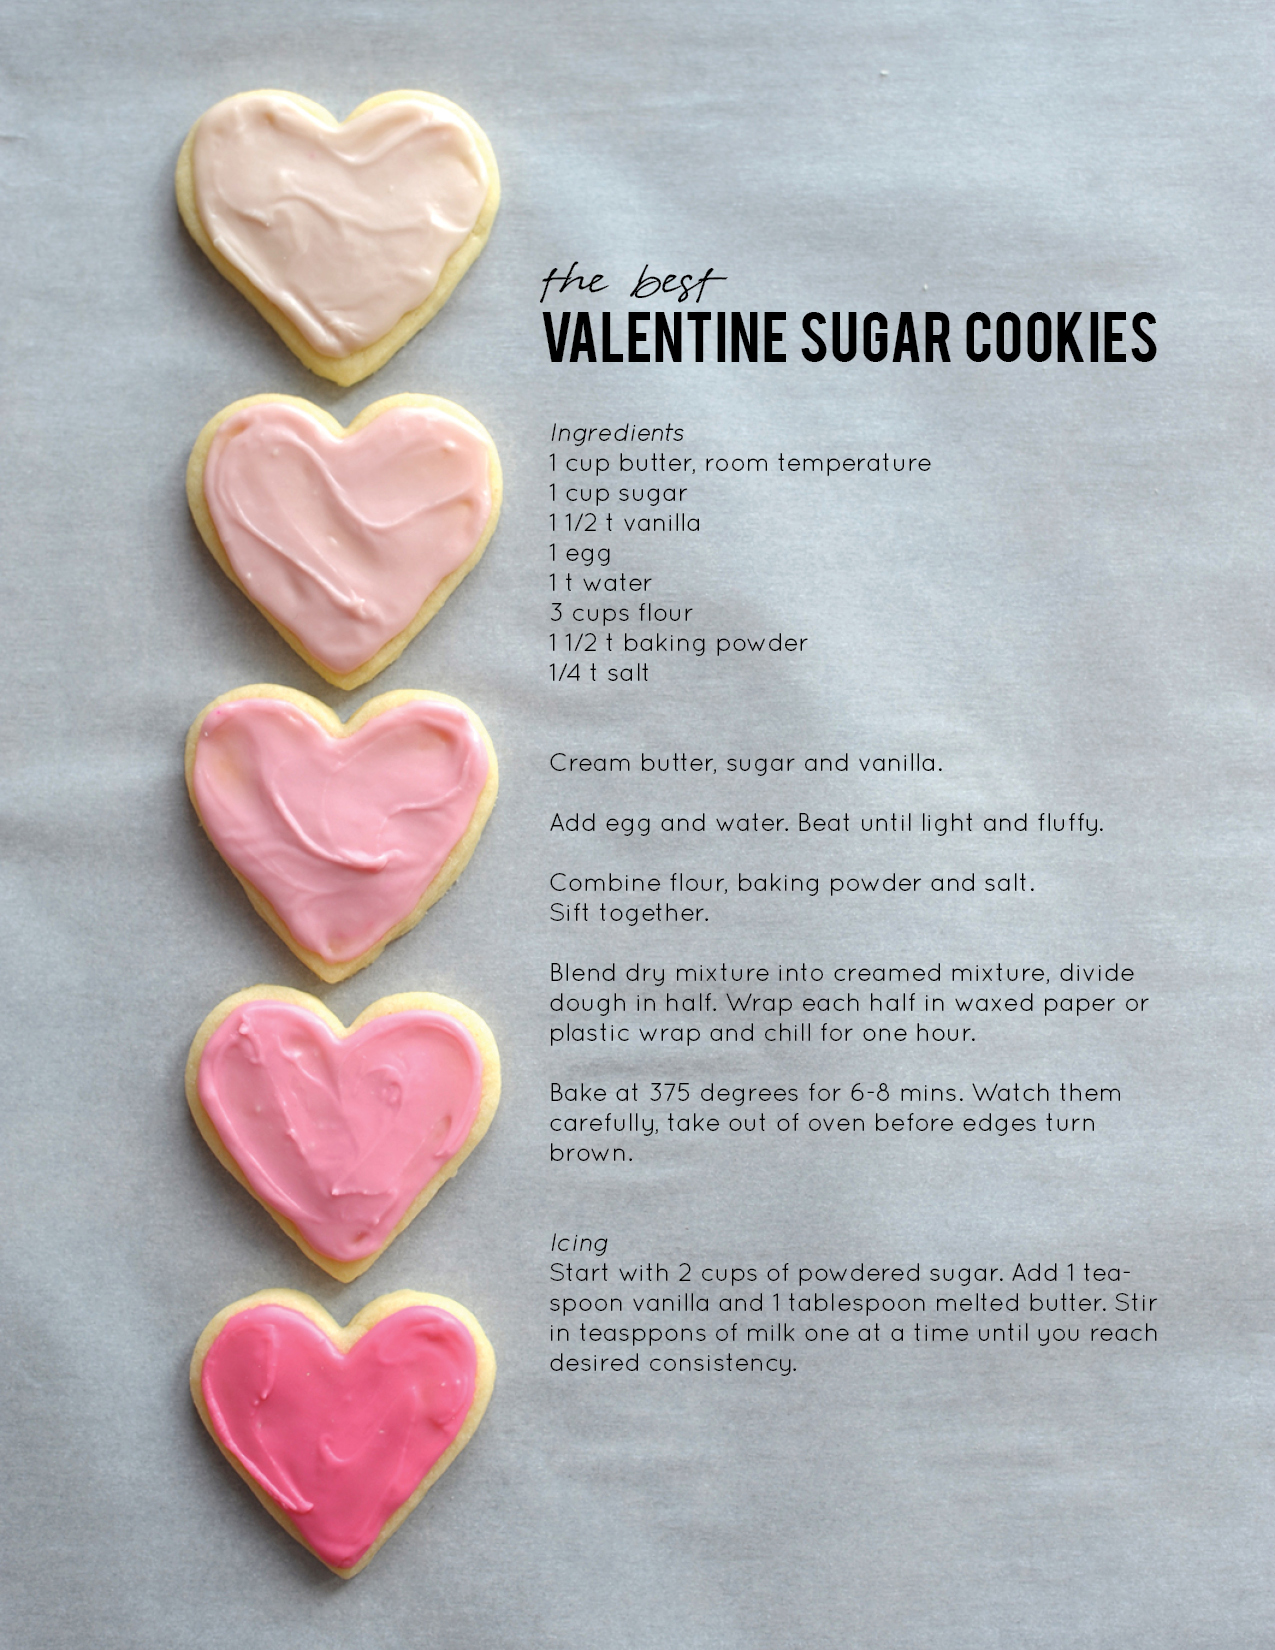 The best Valentine sugar cookie recipe on aliceandlois.com